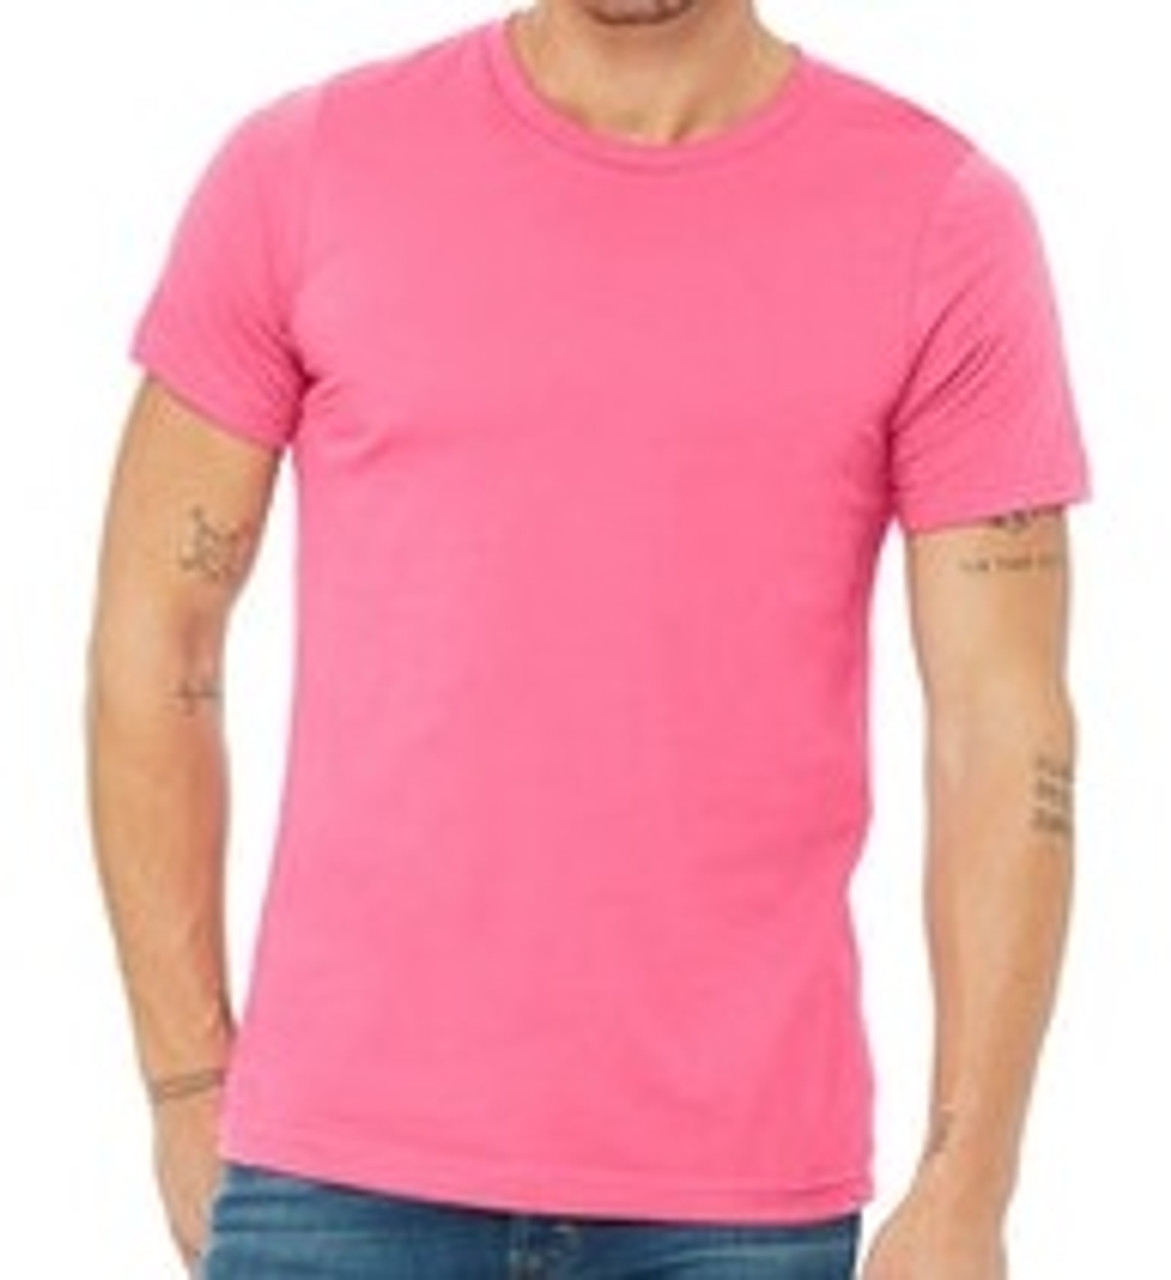 XL - Adult - Charity Pink - Bella Canvas - Custom T-shirt